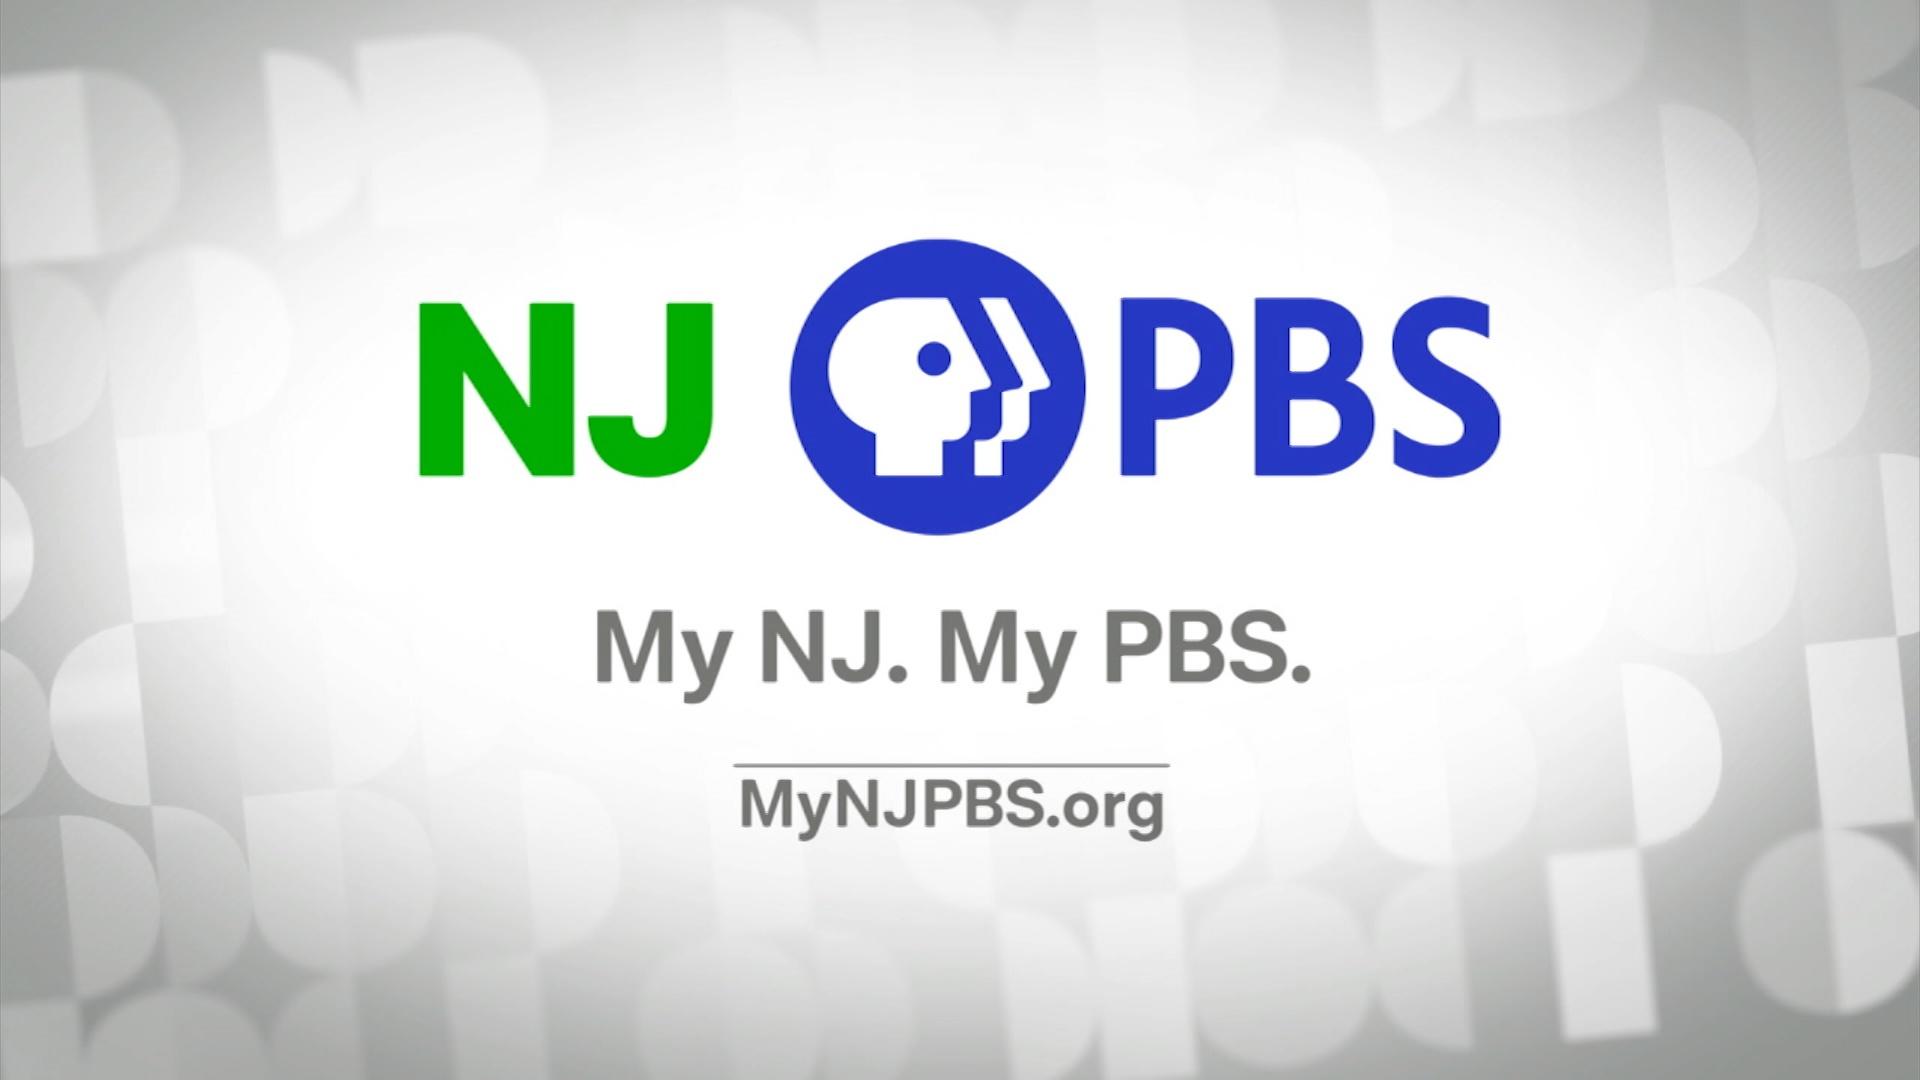 NJ PBS  New Jersey Public Media